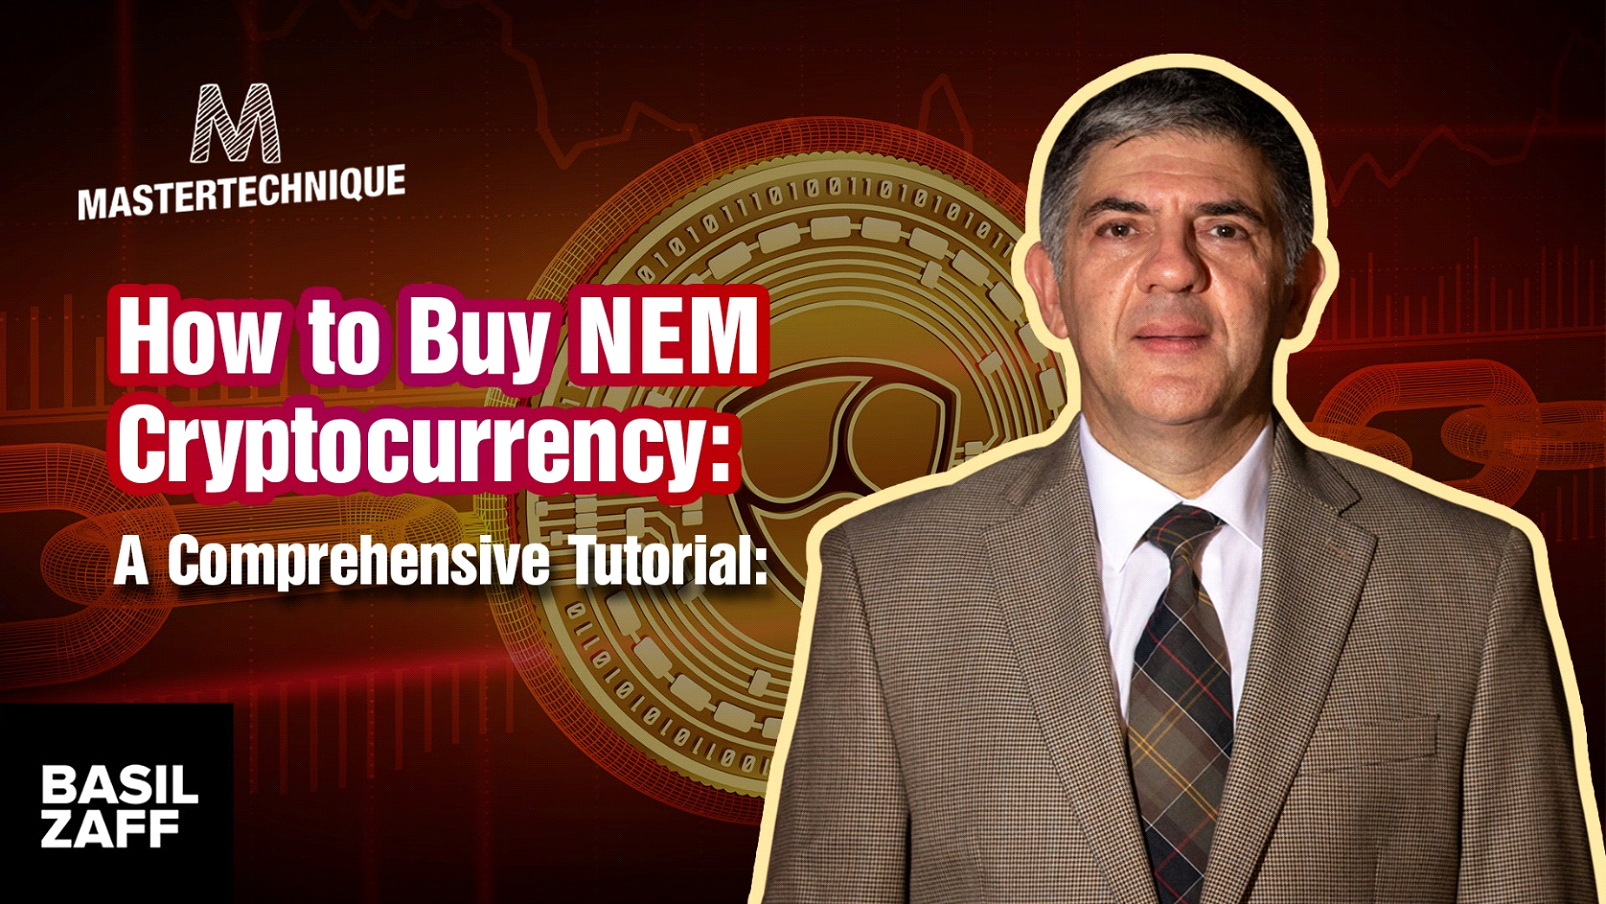 where can you buy nem crypto